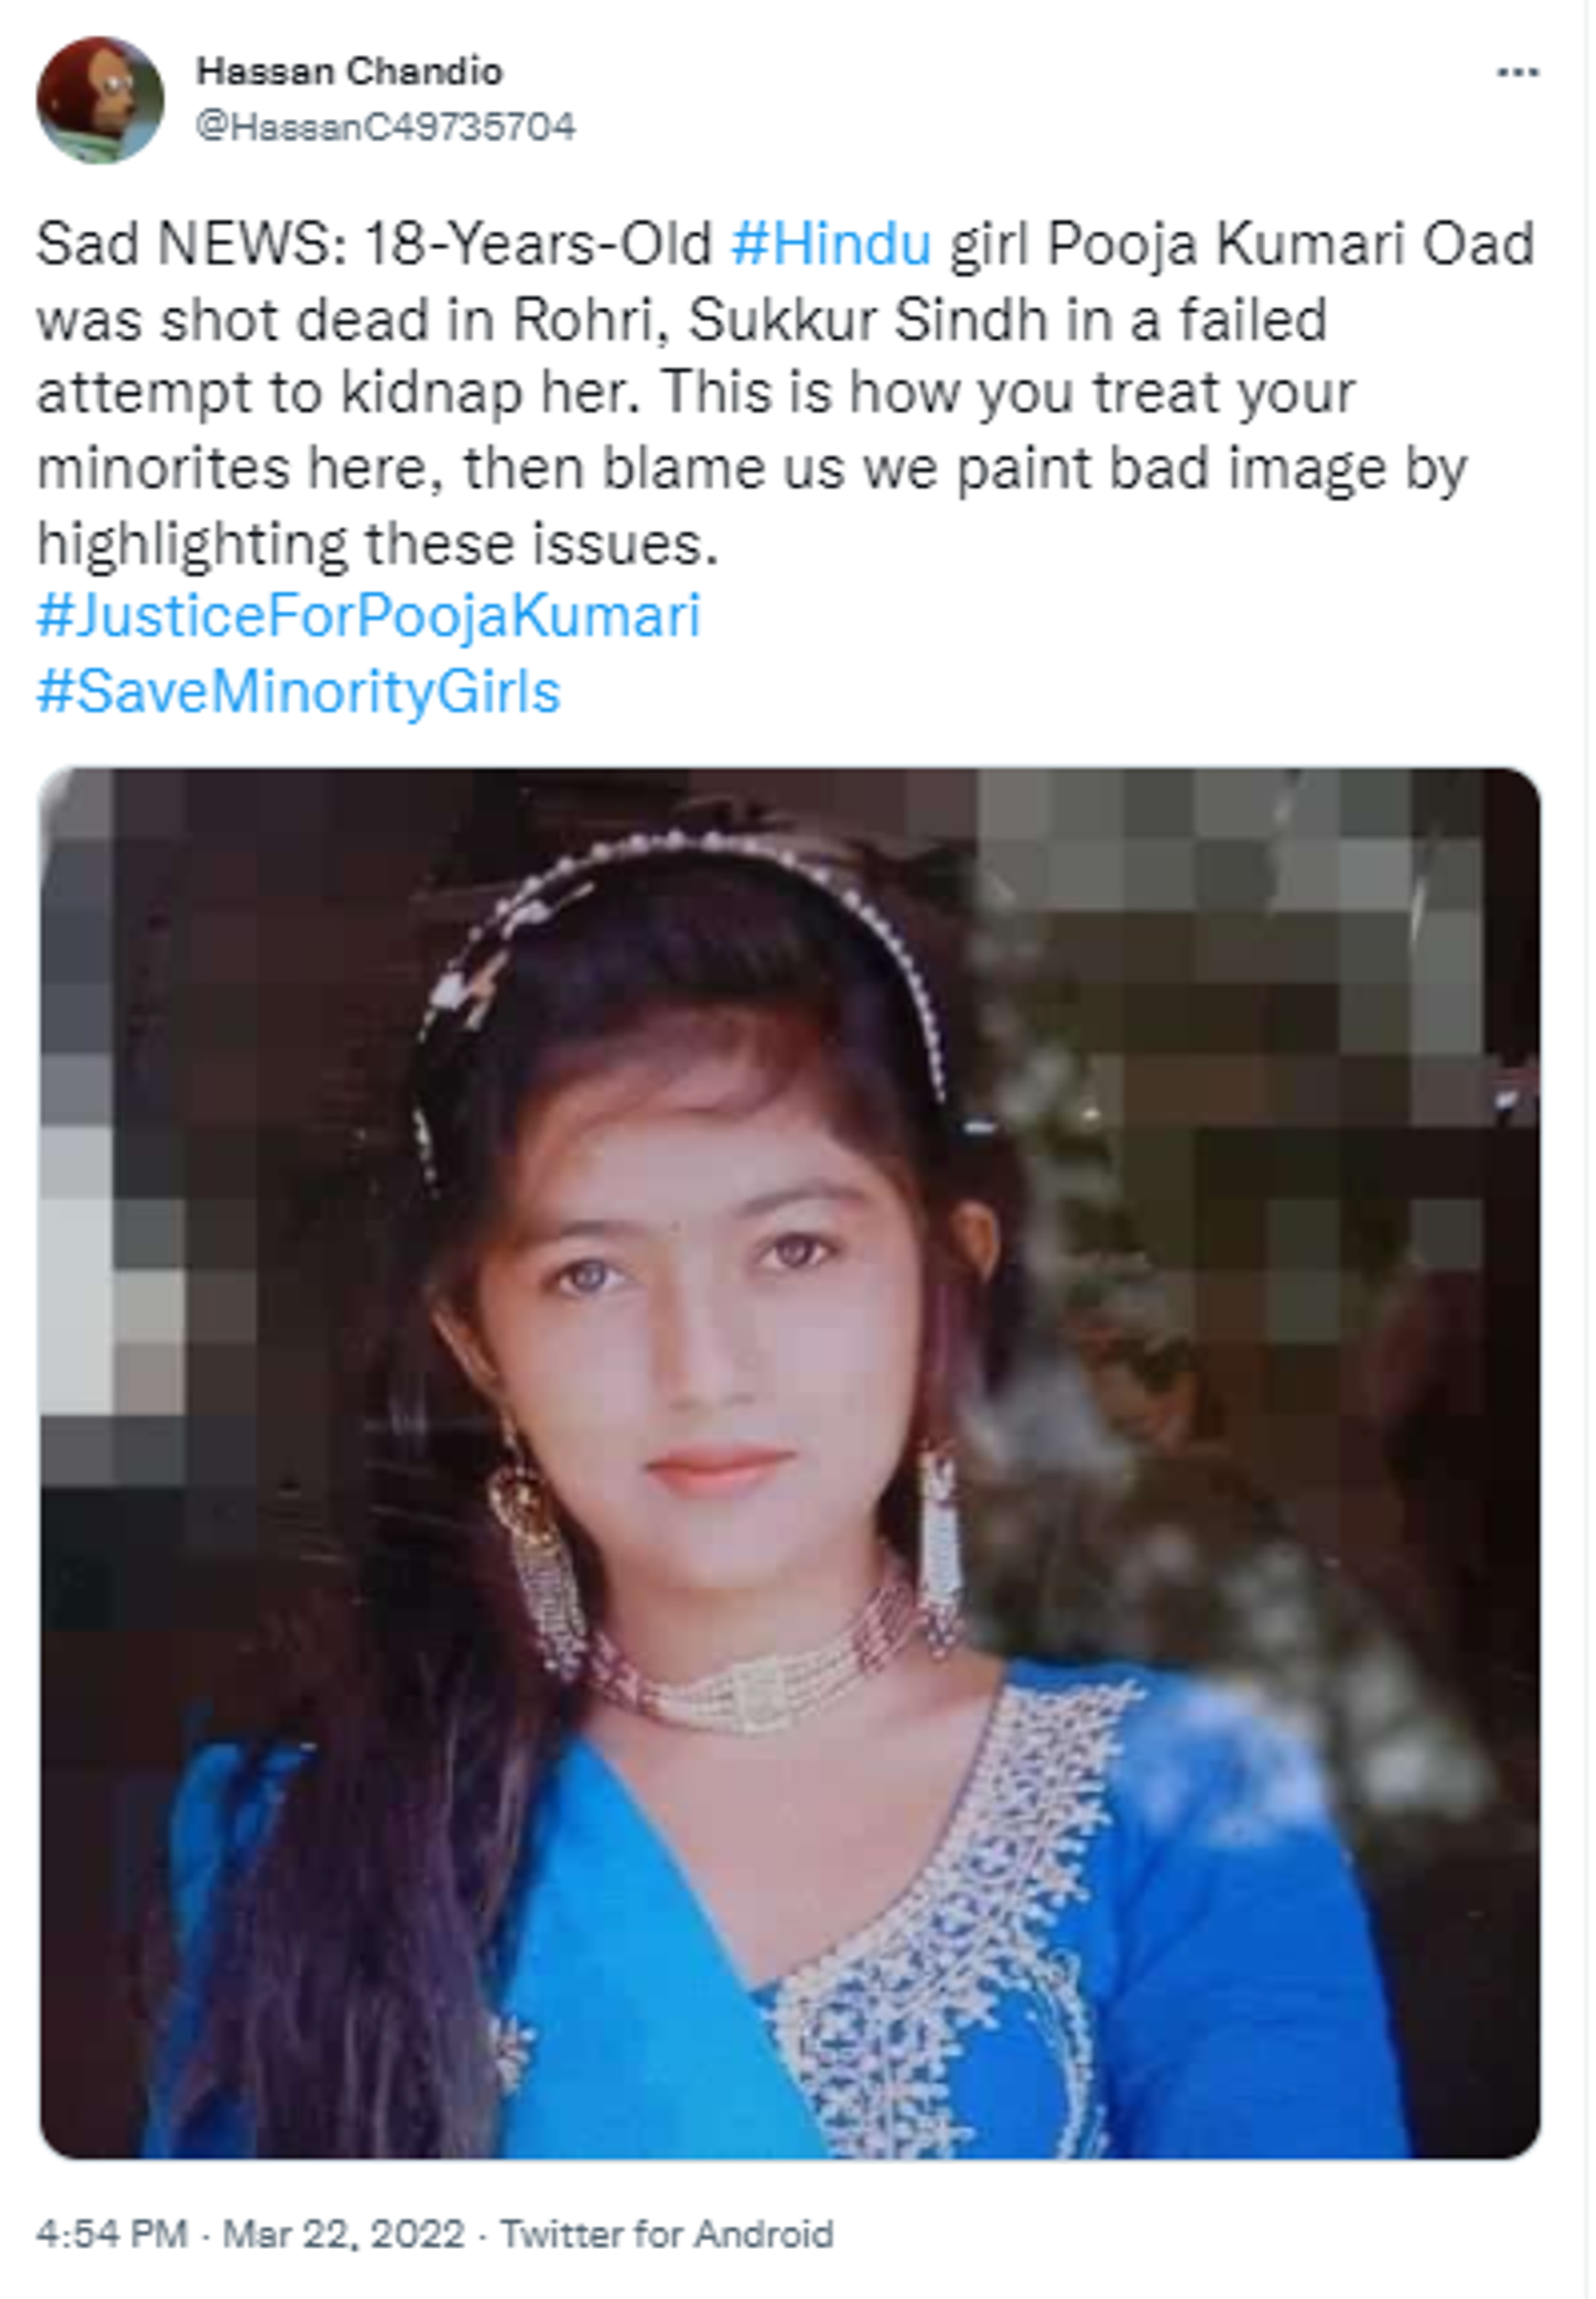 Twitter User Condoles Killing of Hindu Girl in Pakistan - Sputnik International, 1920, 22.03.2022